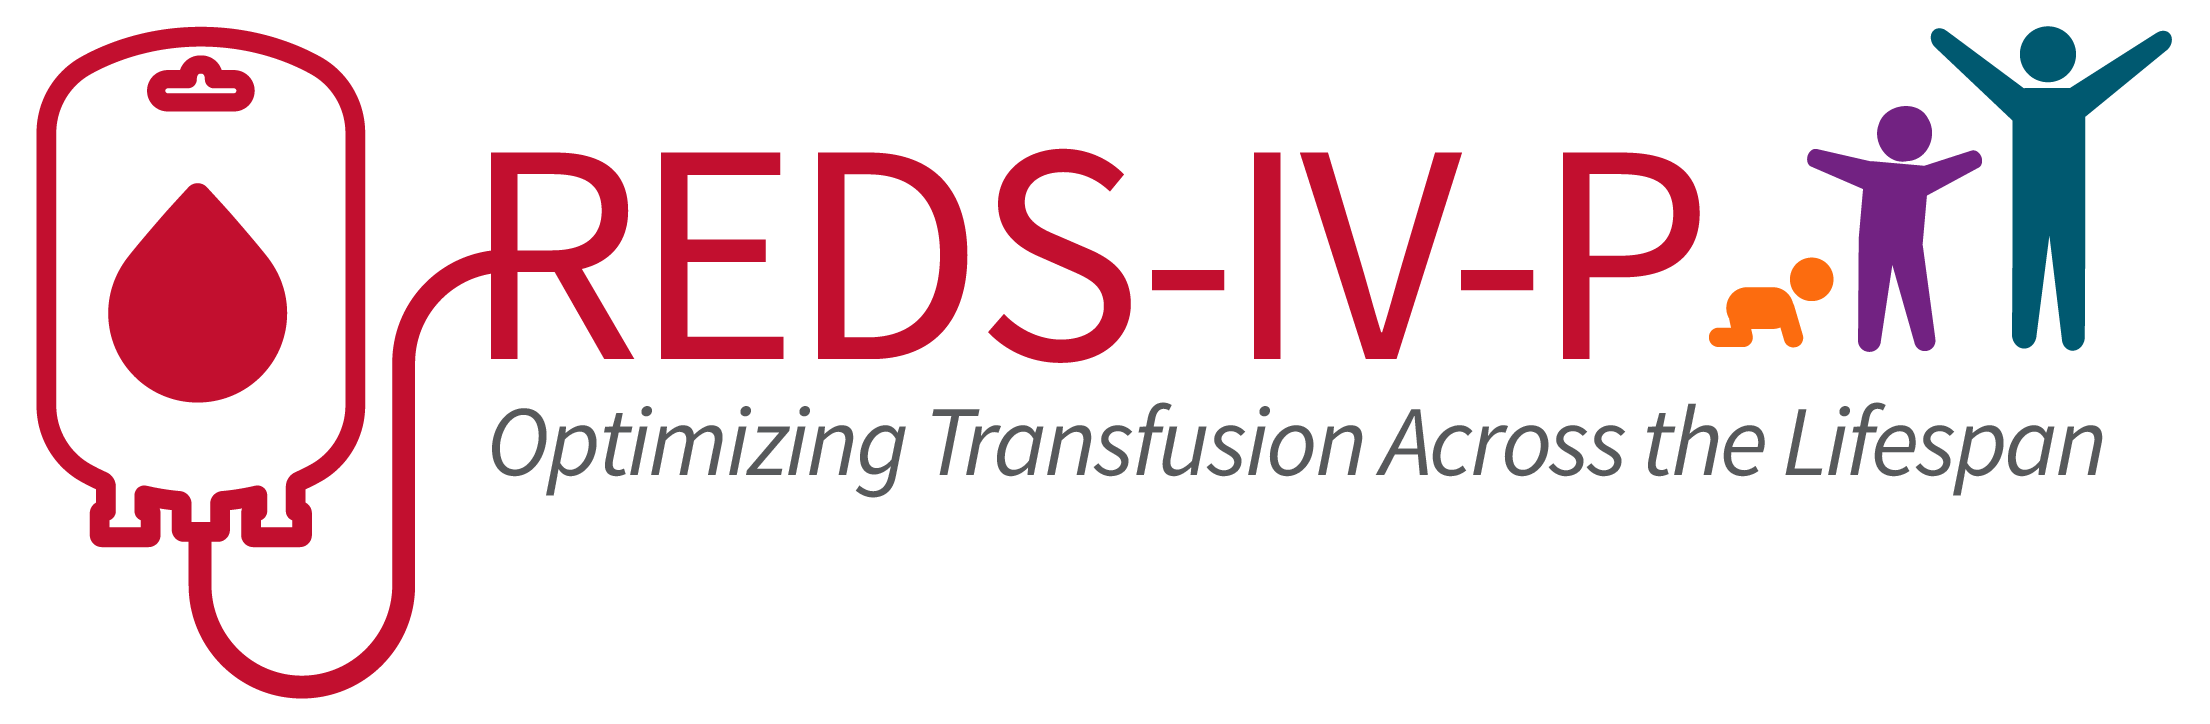 REDS-IV-P Optimizing Transfusion Across the Lifespan - Home Page